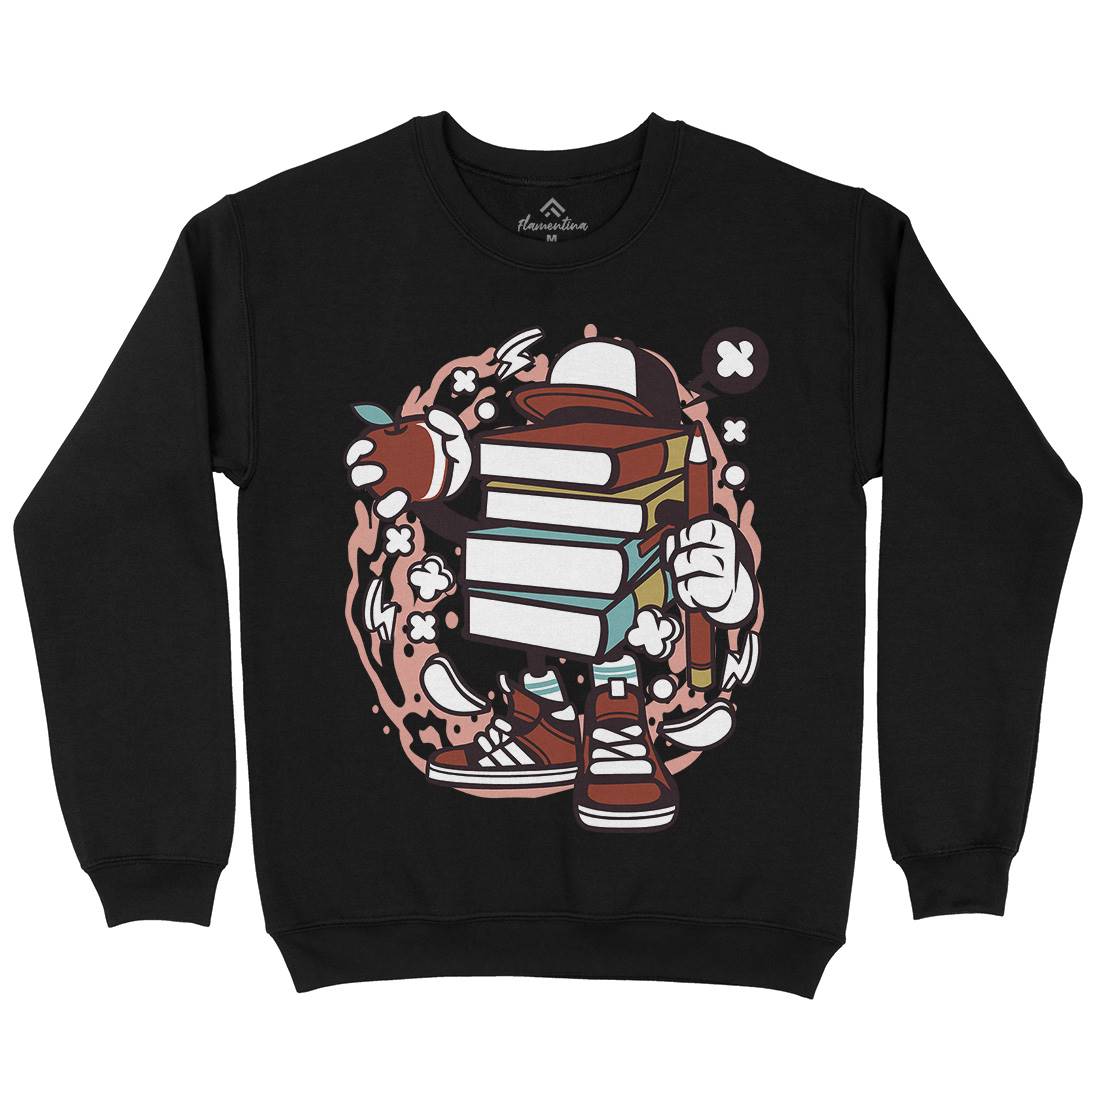 Books Kids Crew Neck Sweatshirt Retro C028